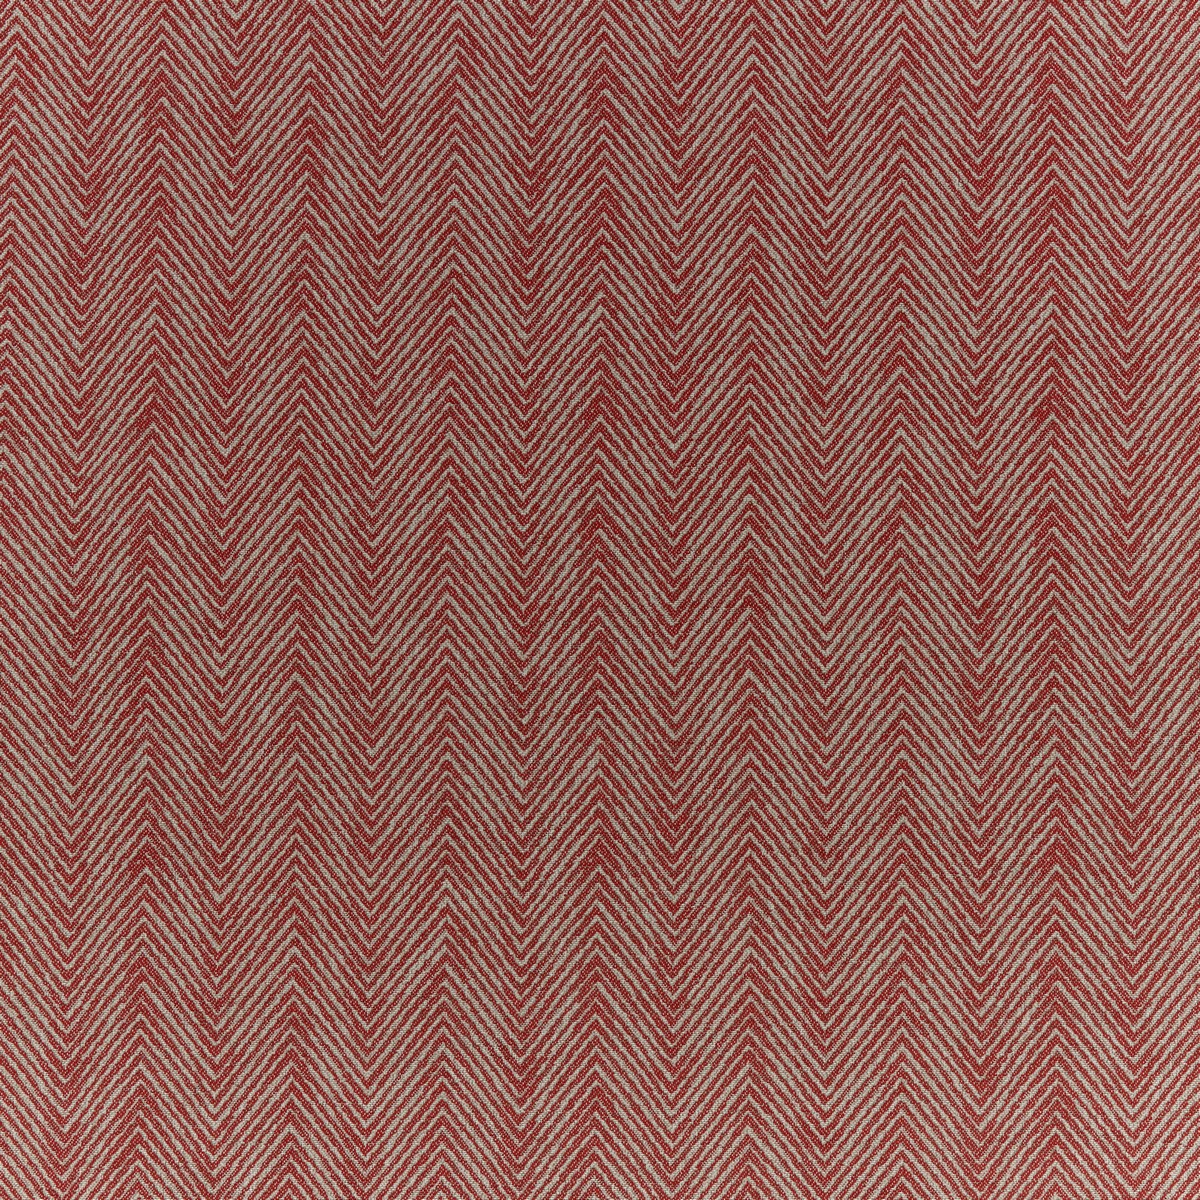 Sula Ruby Fabric by iLiv